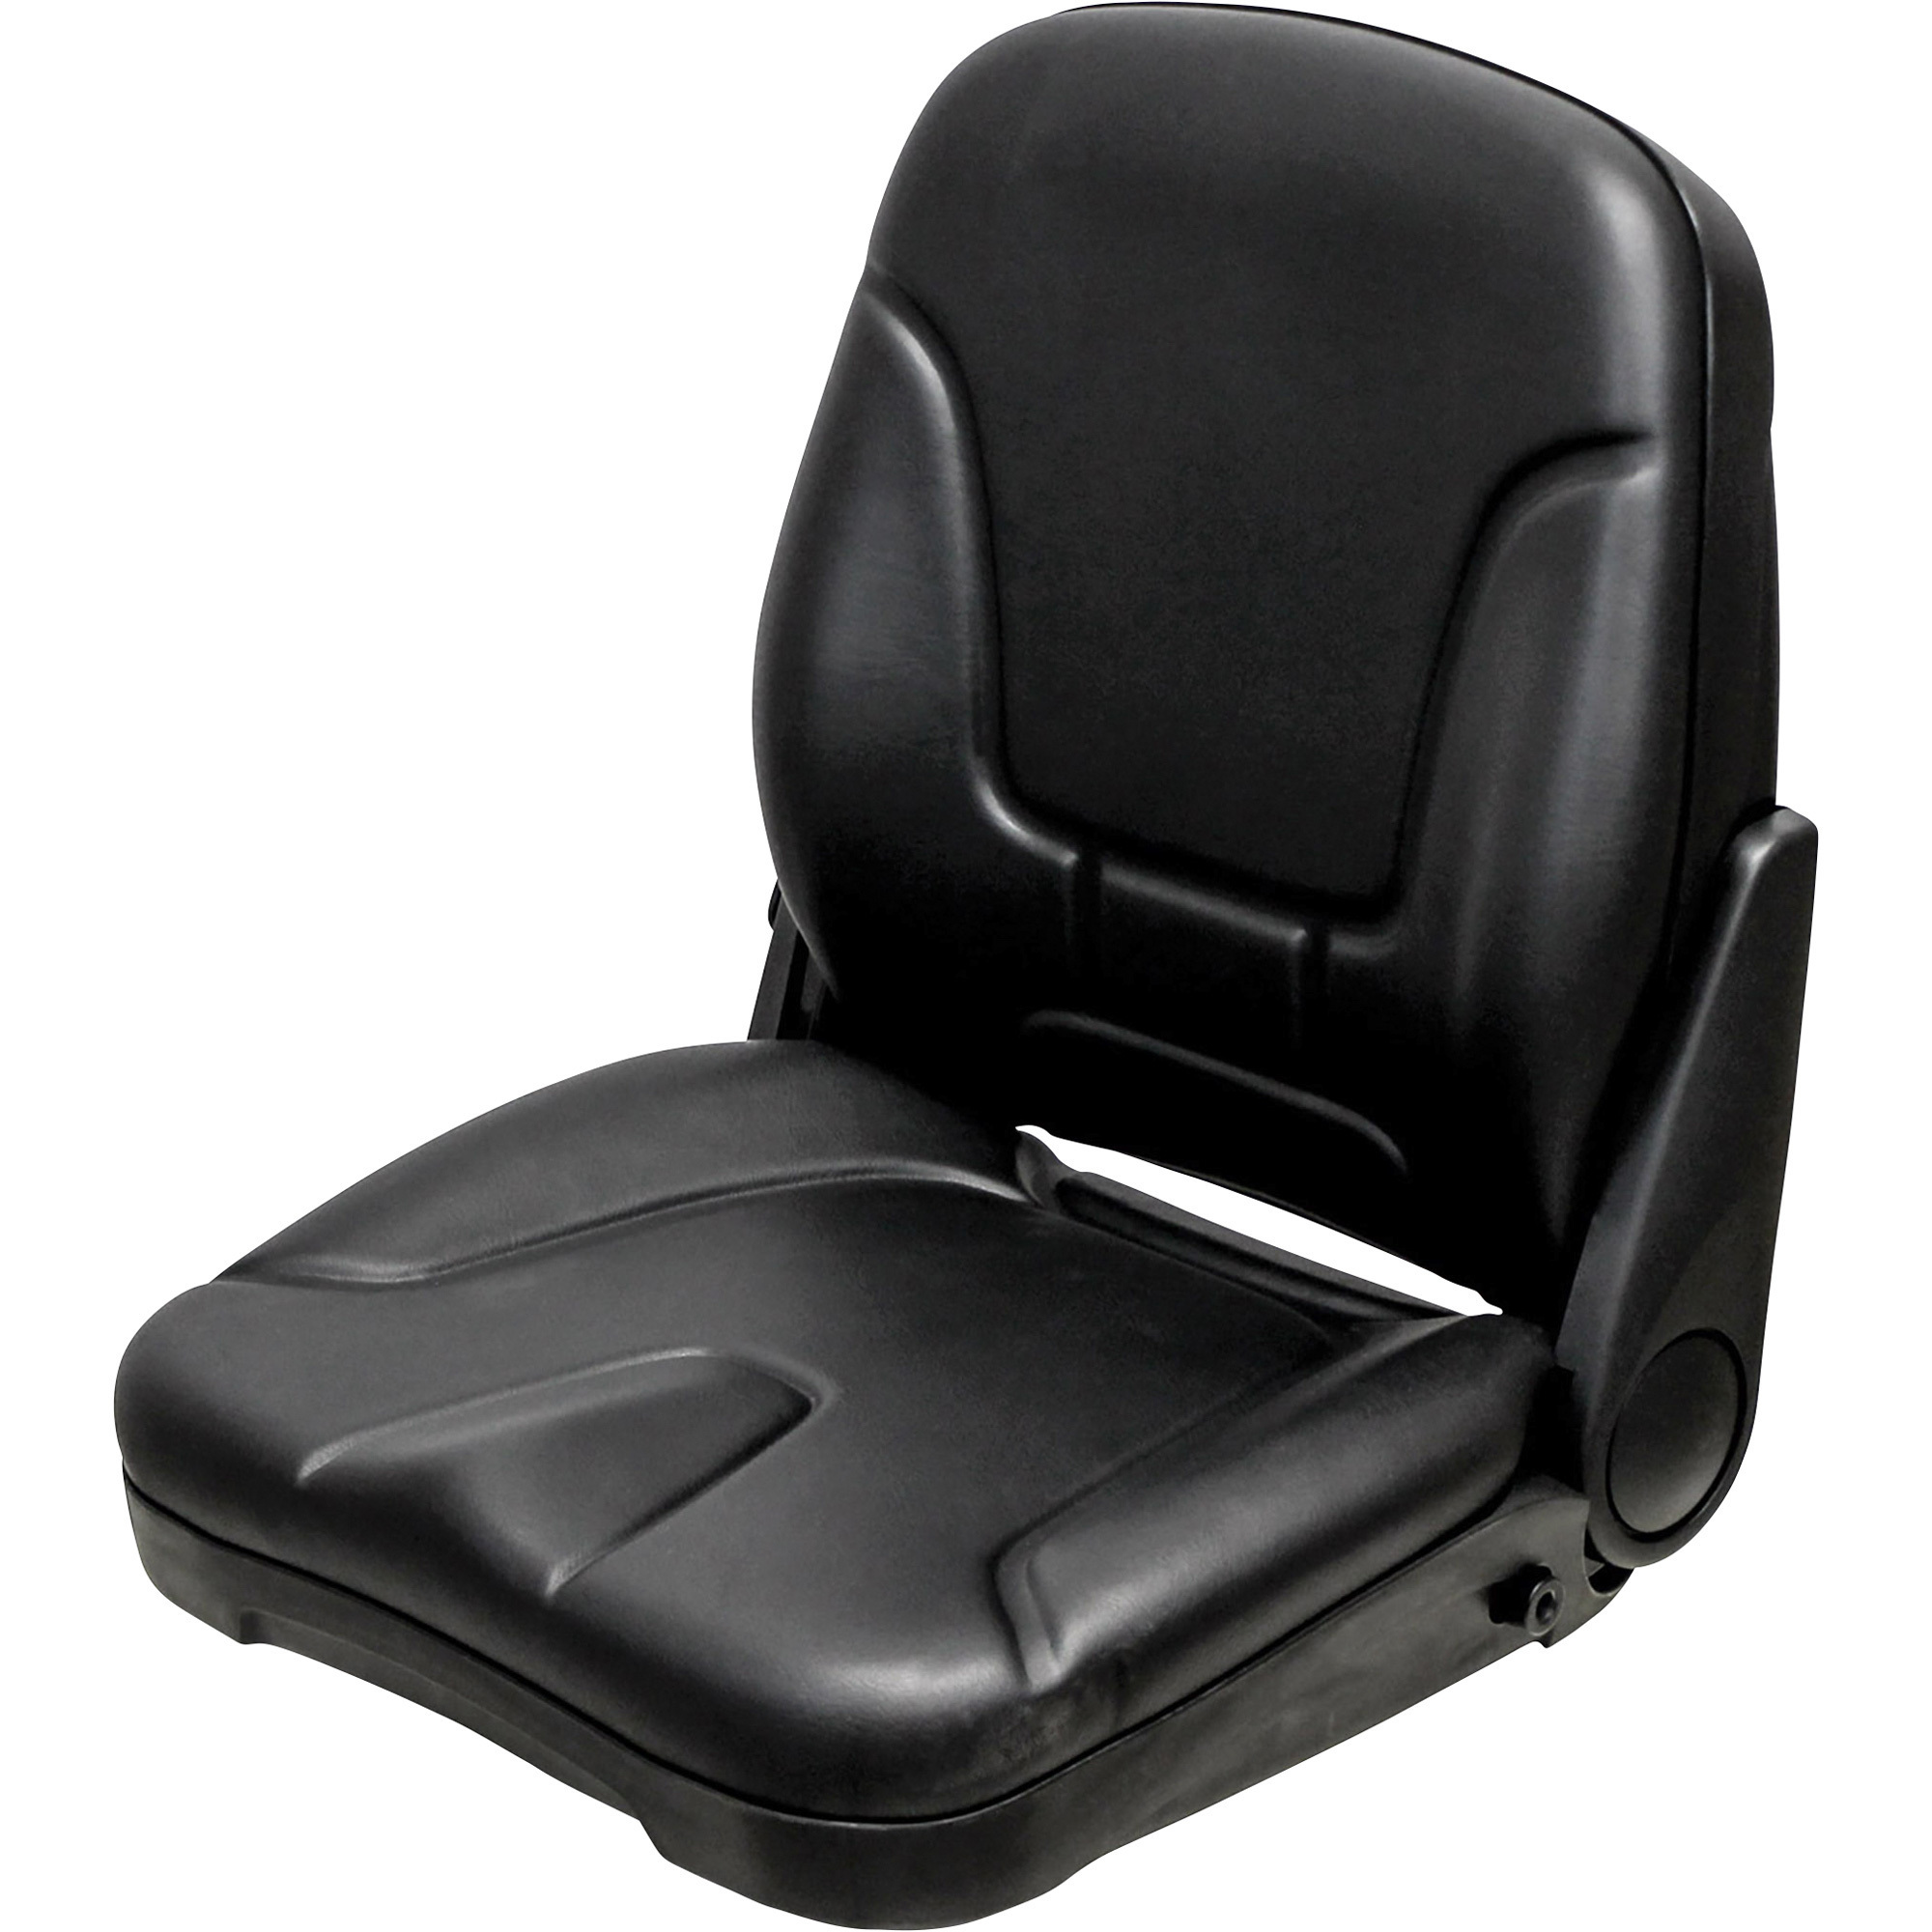 K&M Uni Pro High-Back Seat Assembly, Black Vinyl, Model 8545